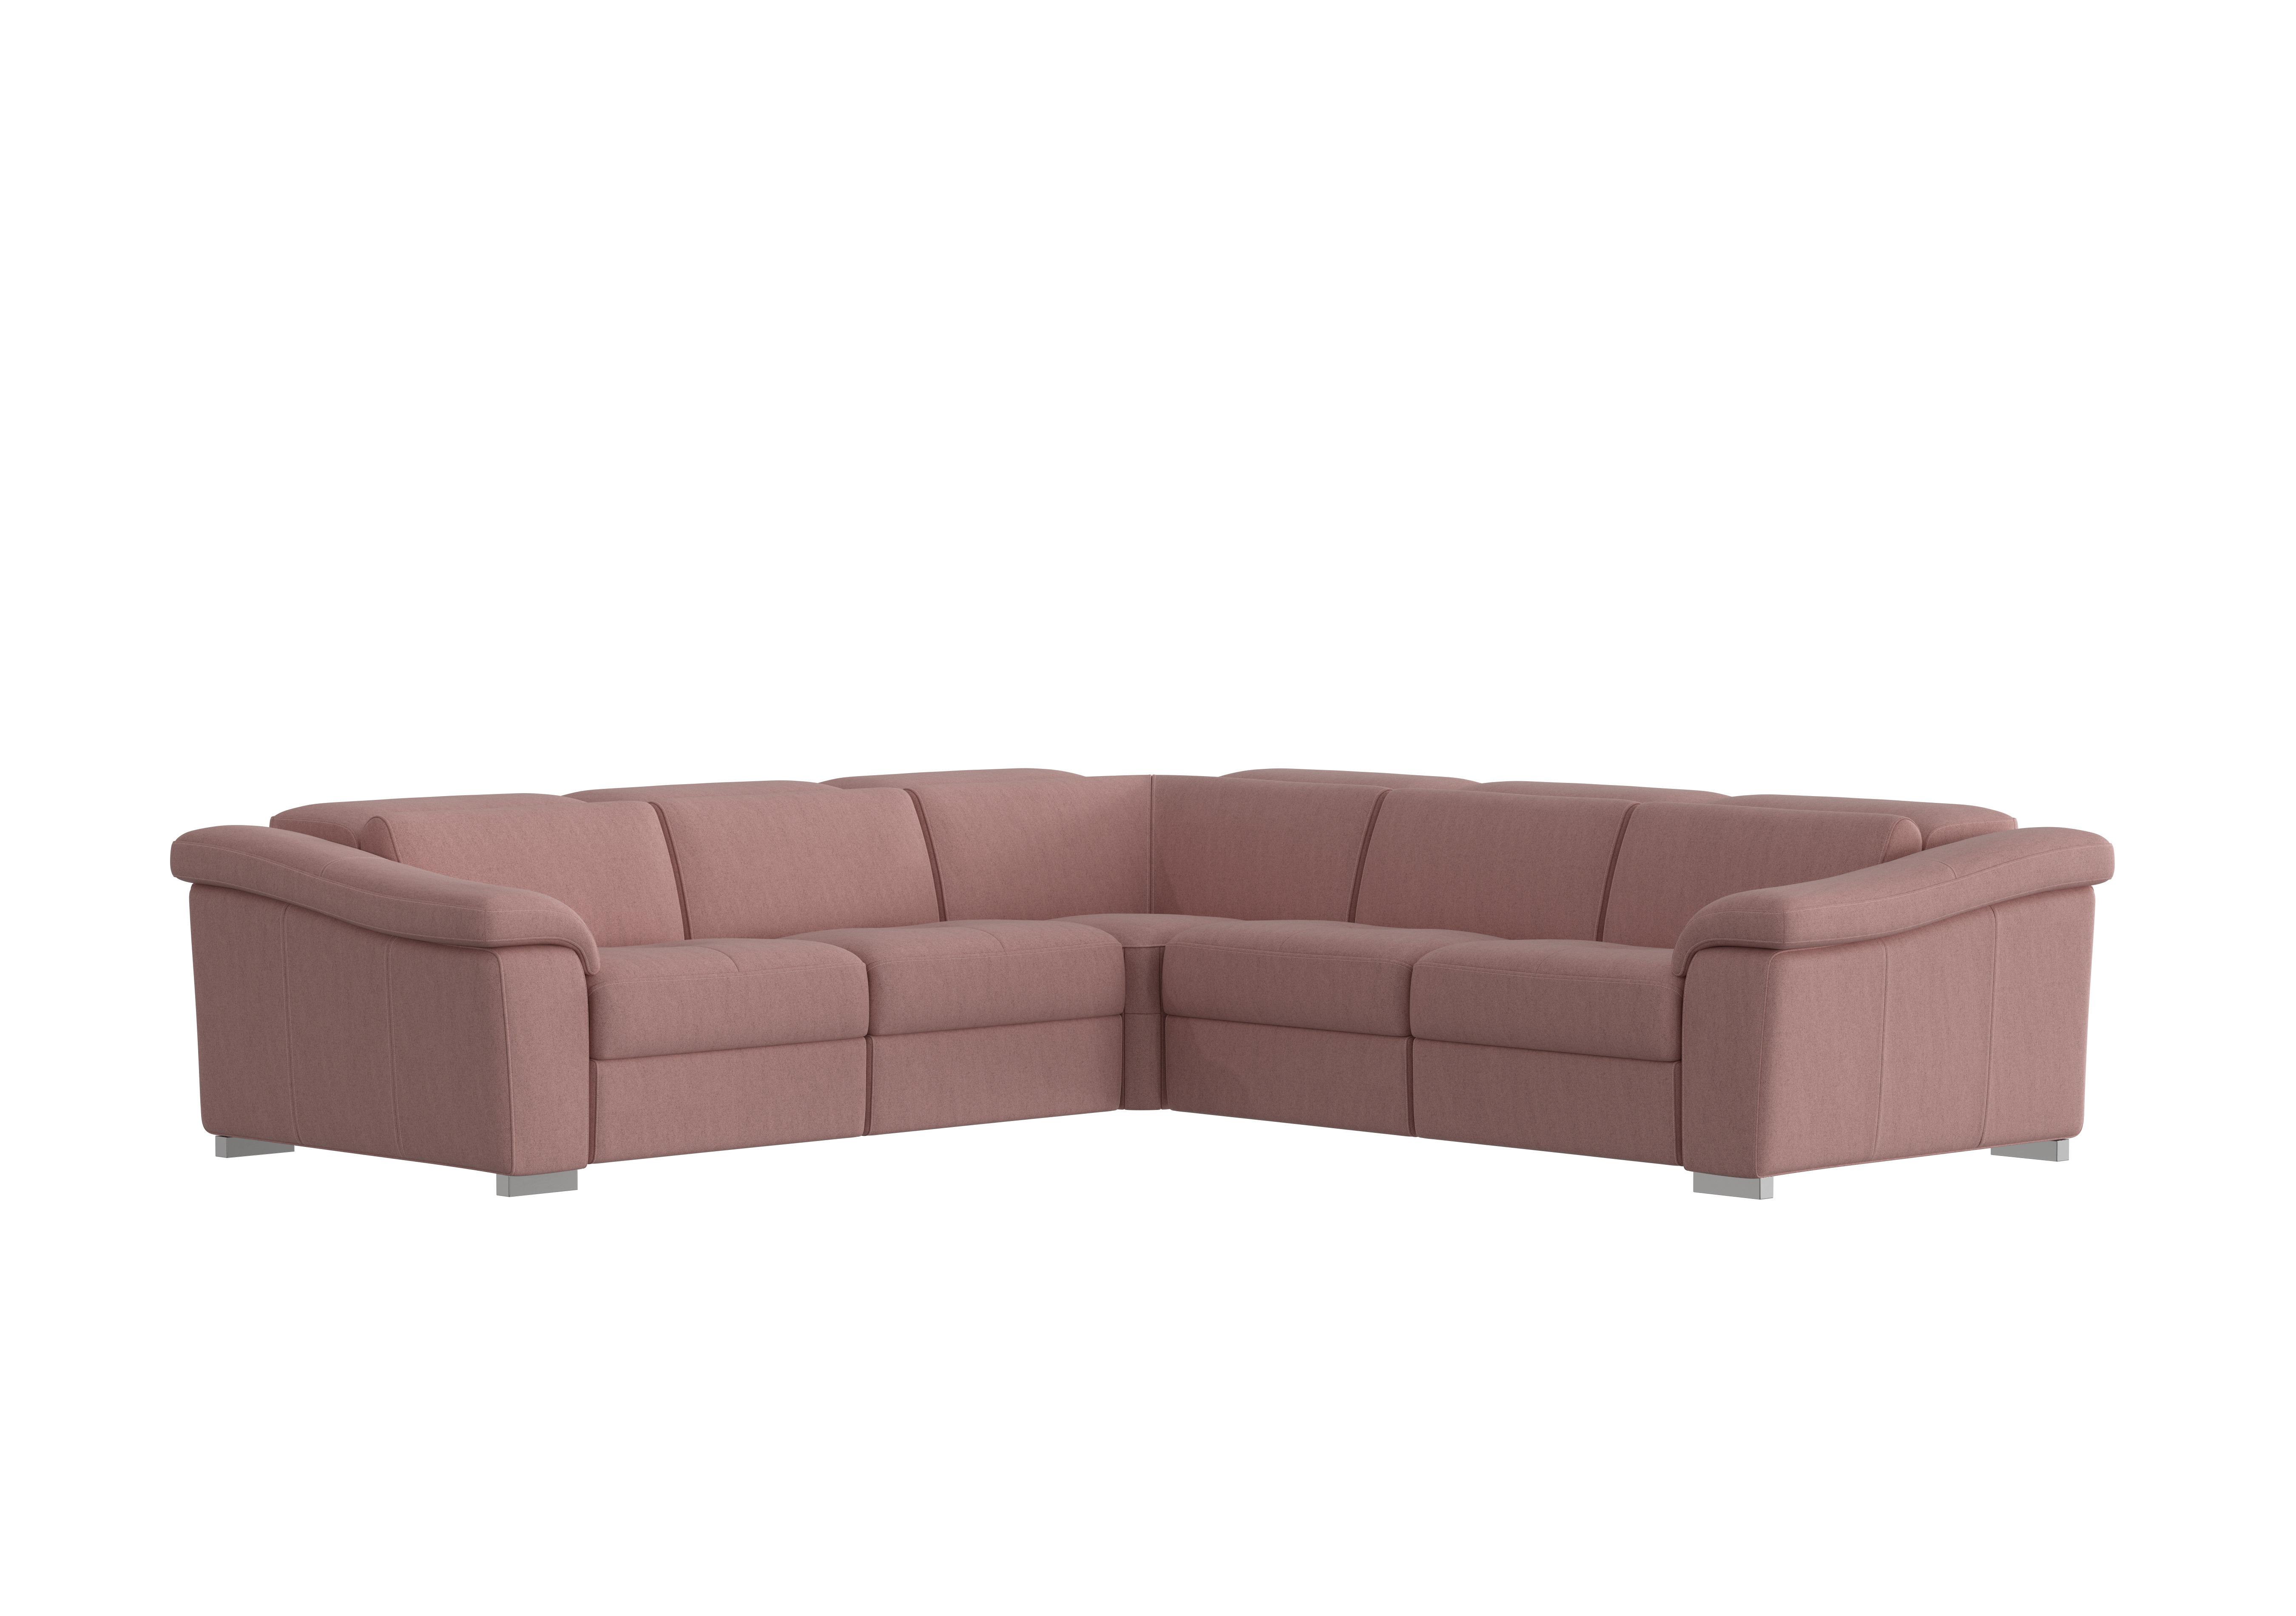 Galileo Fabric Large Corner Sofa in Fuente Coral Ch on Furniture Village